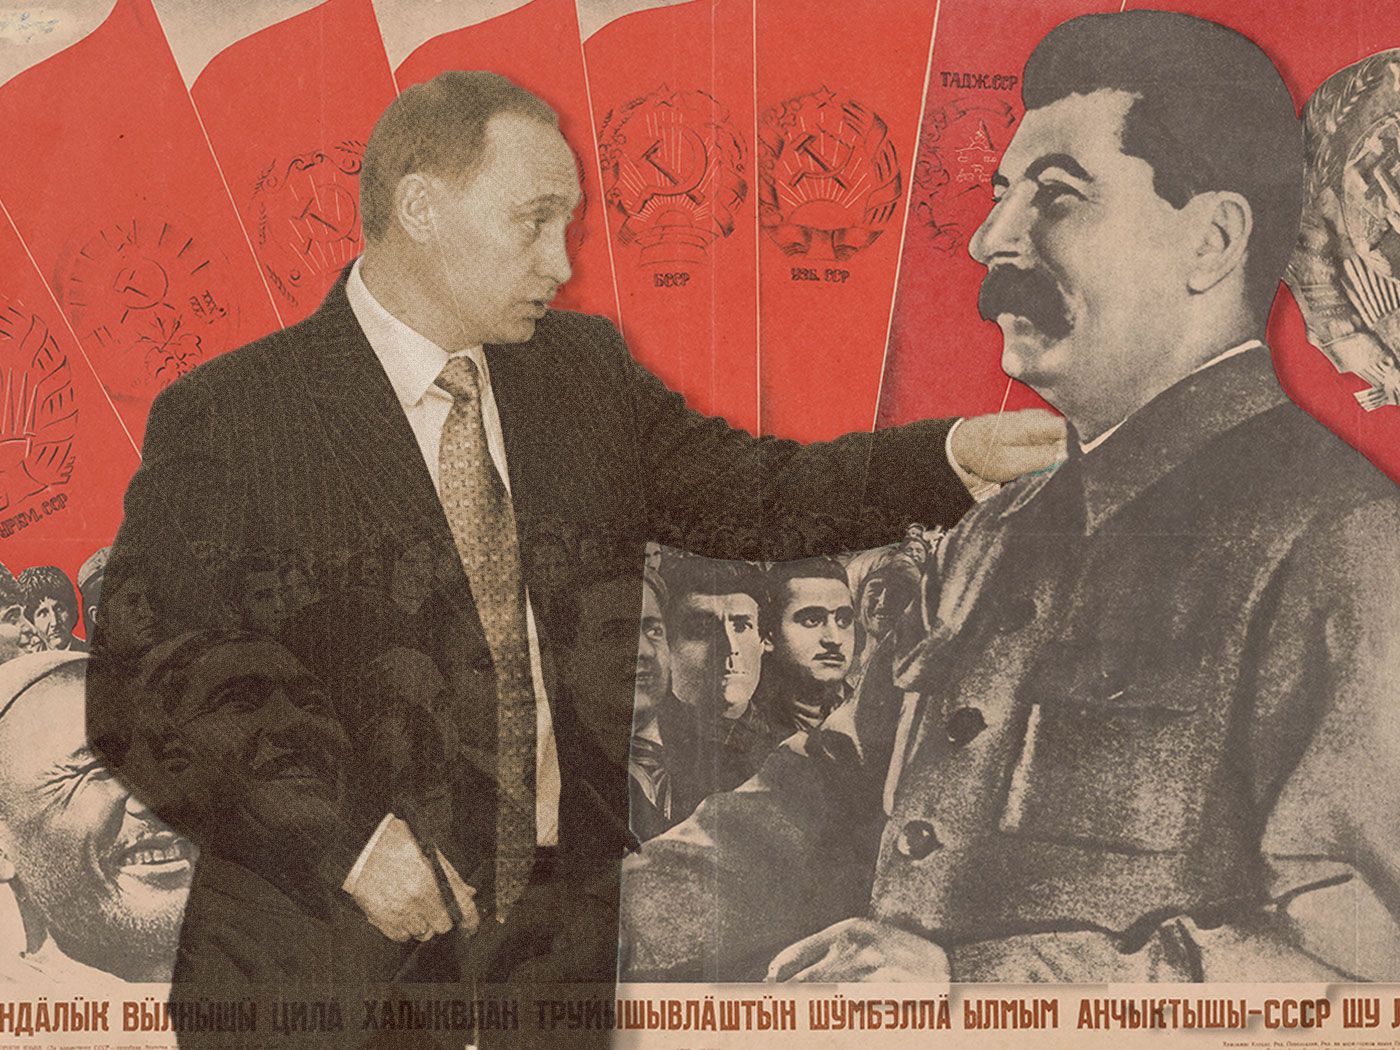 Illustration of Vladimir Putin putting his hand on Joseph Stalin's shoulder